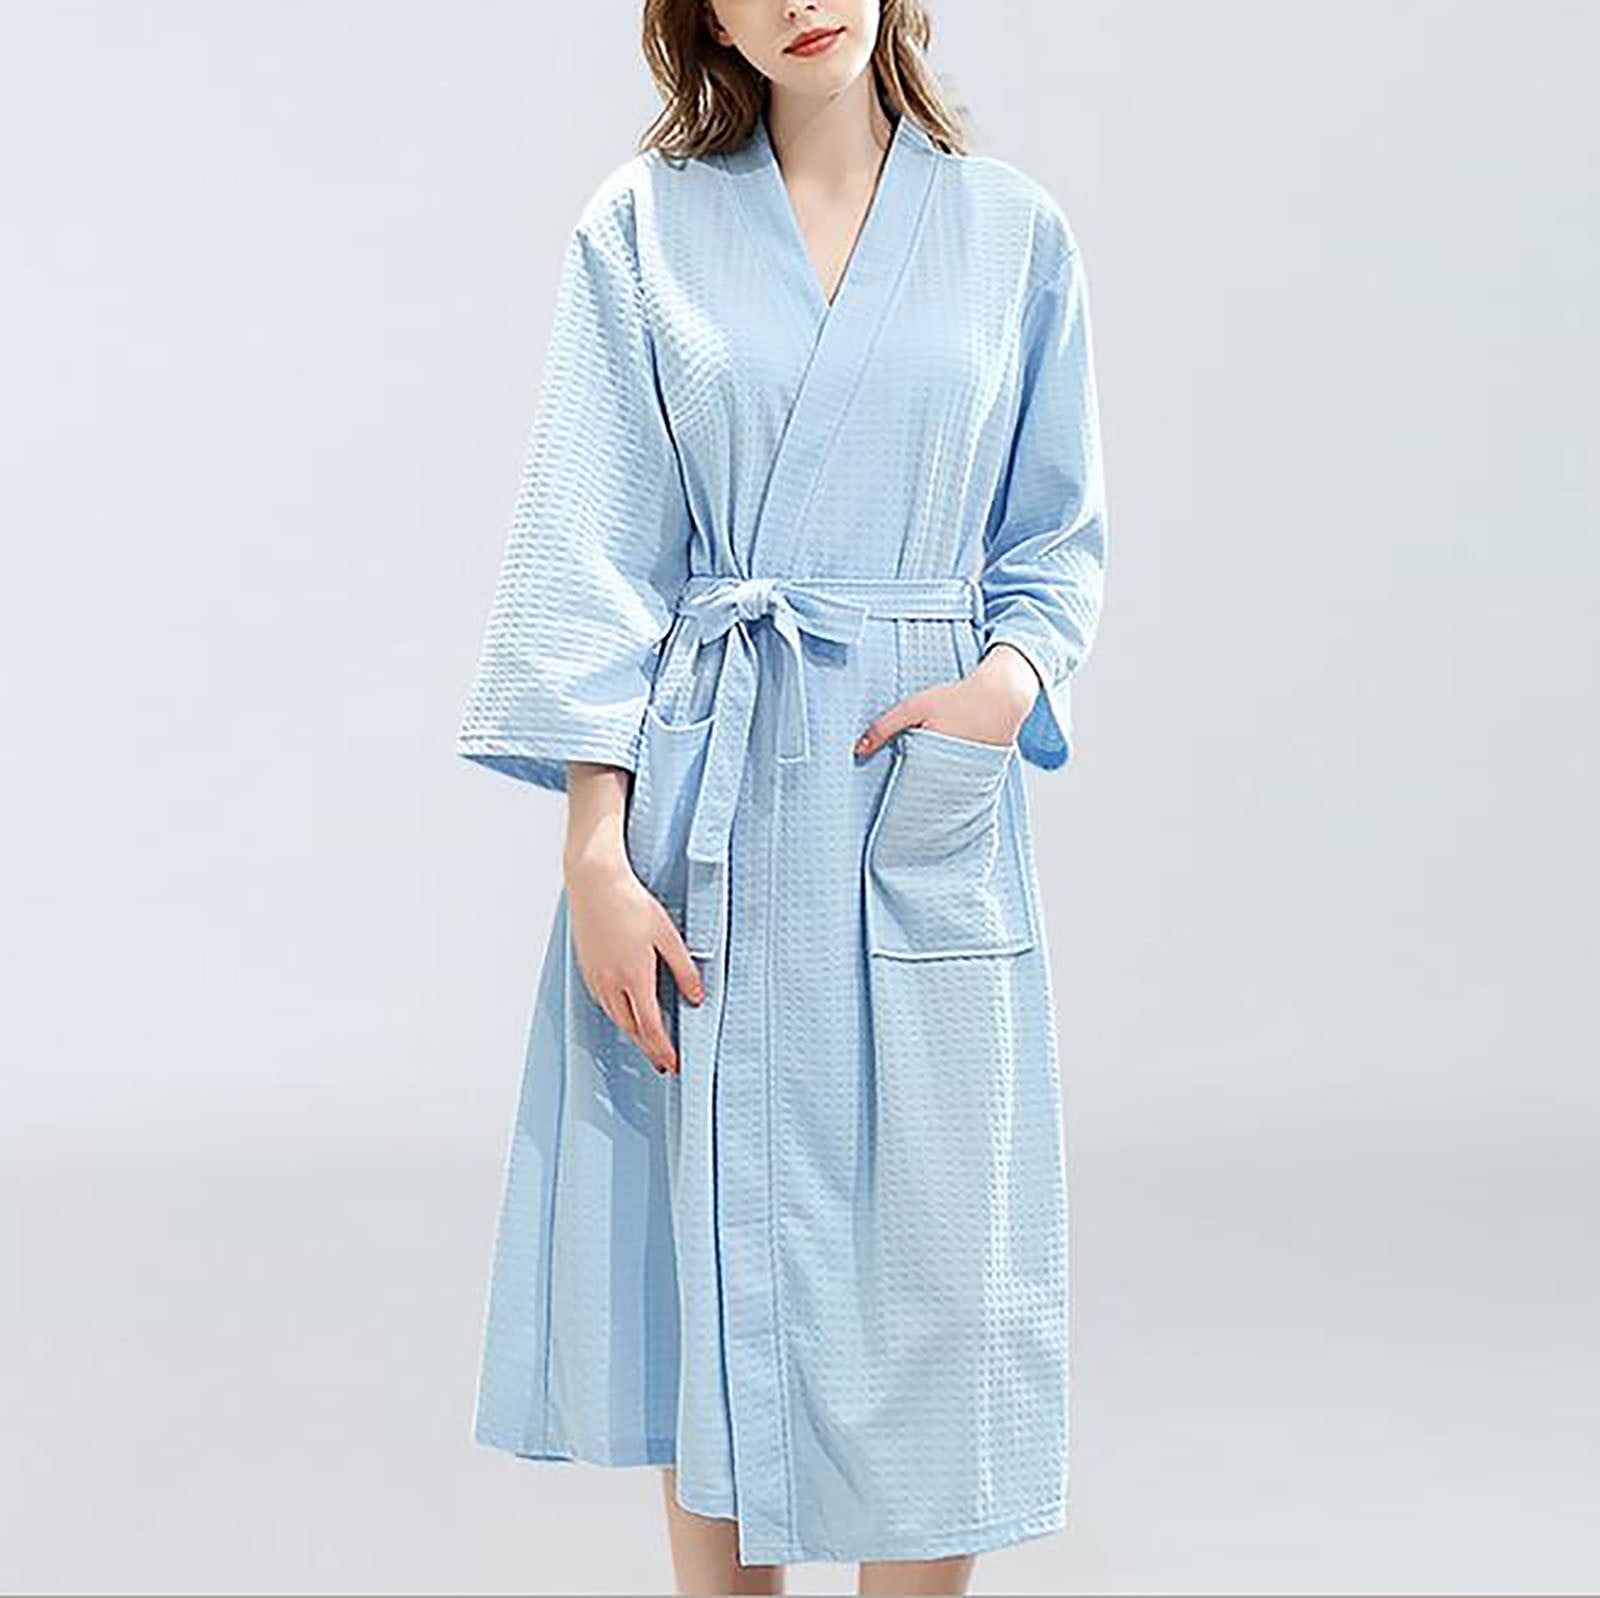 Robes For Women Womens Solid Bandage Robe Bathrobe Gown Pajamas Long Sleepwear Pocket Waistband Belts Sky Blue Xl ac1813 0ab60936 be24 403b a0ce 0ffeb507a38a.e2e58989aedcb71af3b78b115792b996